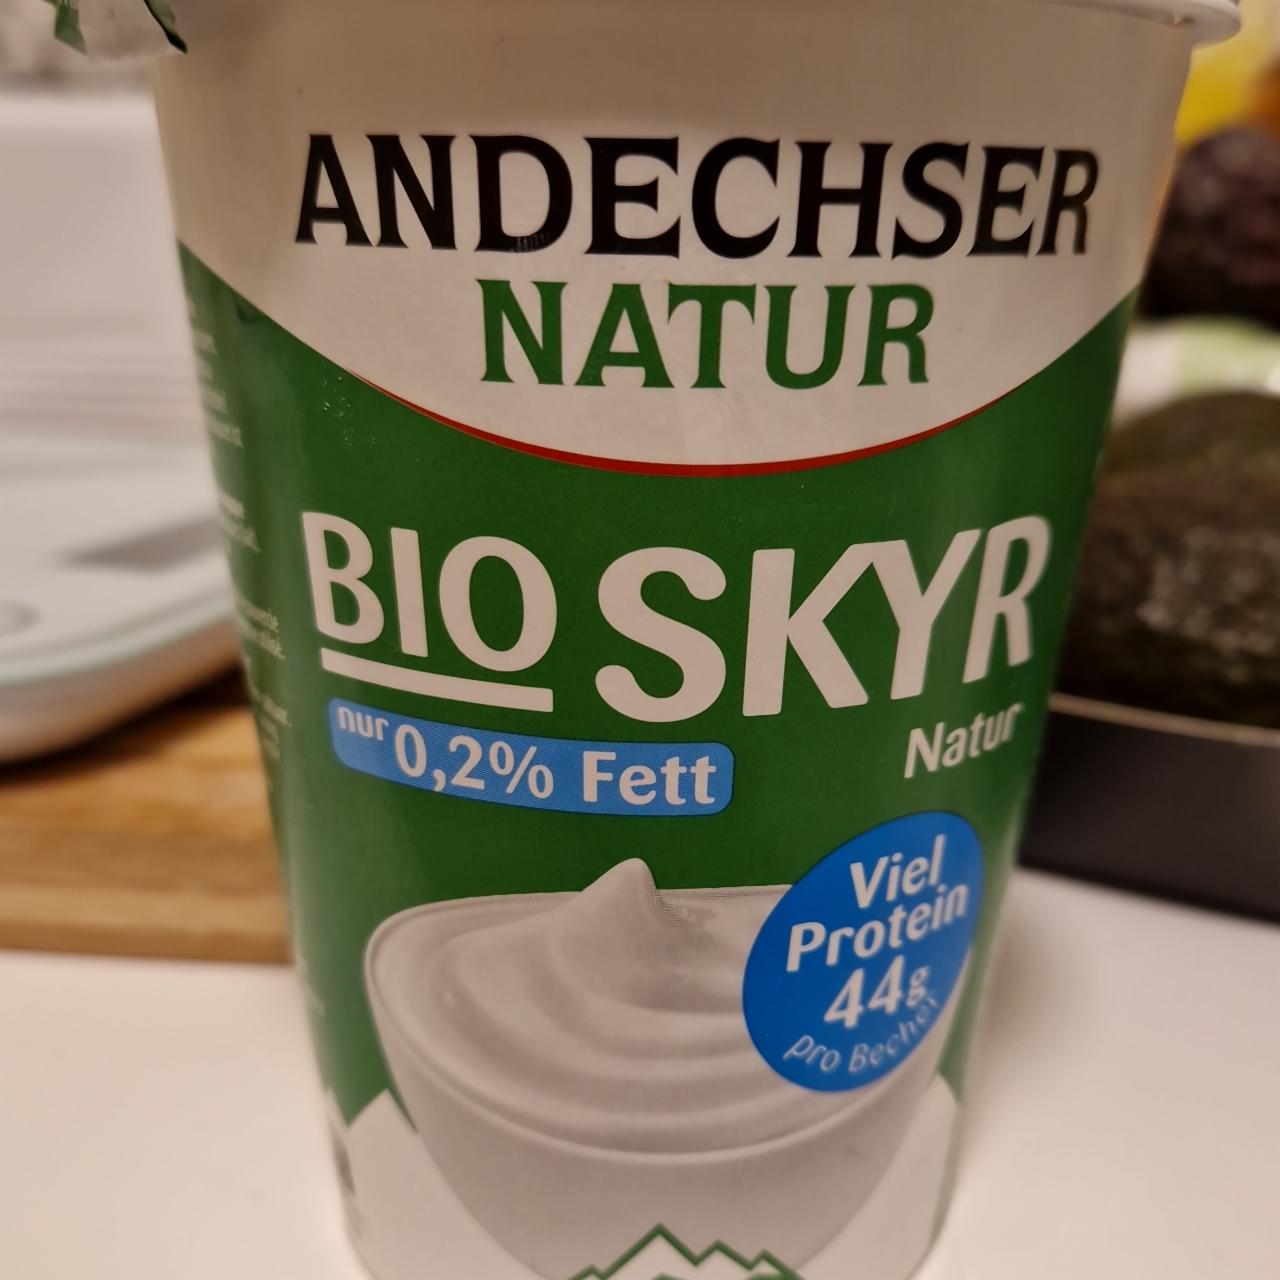 Zdjęcia - Natur Bio Skyr 0,2% Fett Andechser